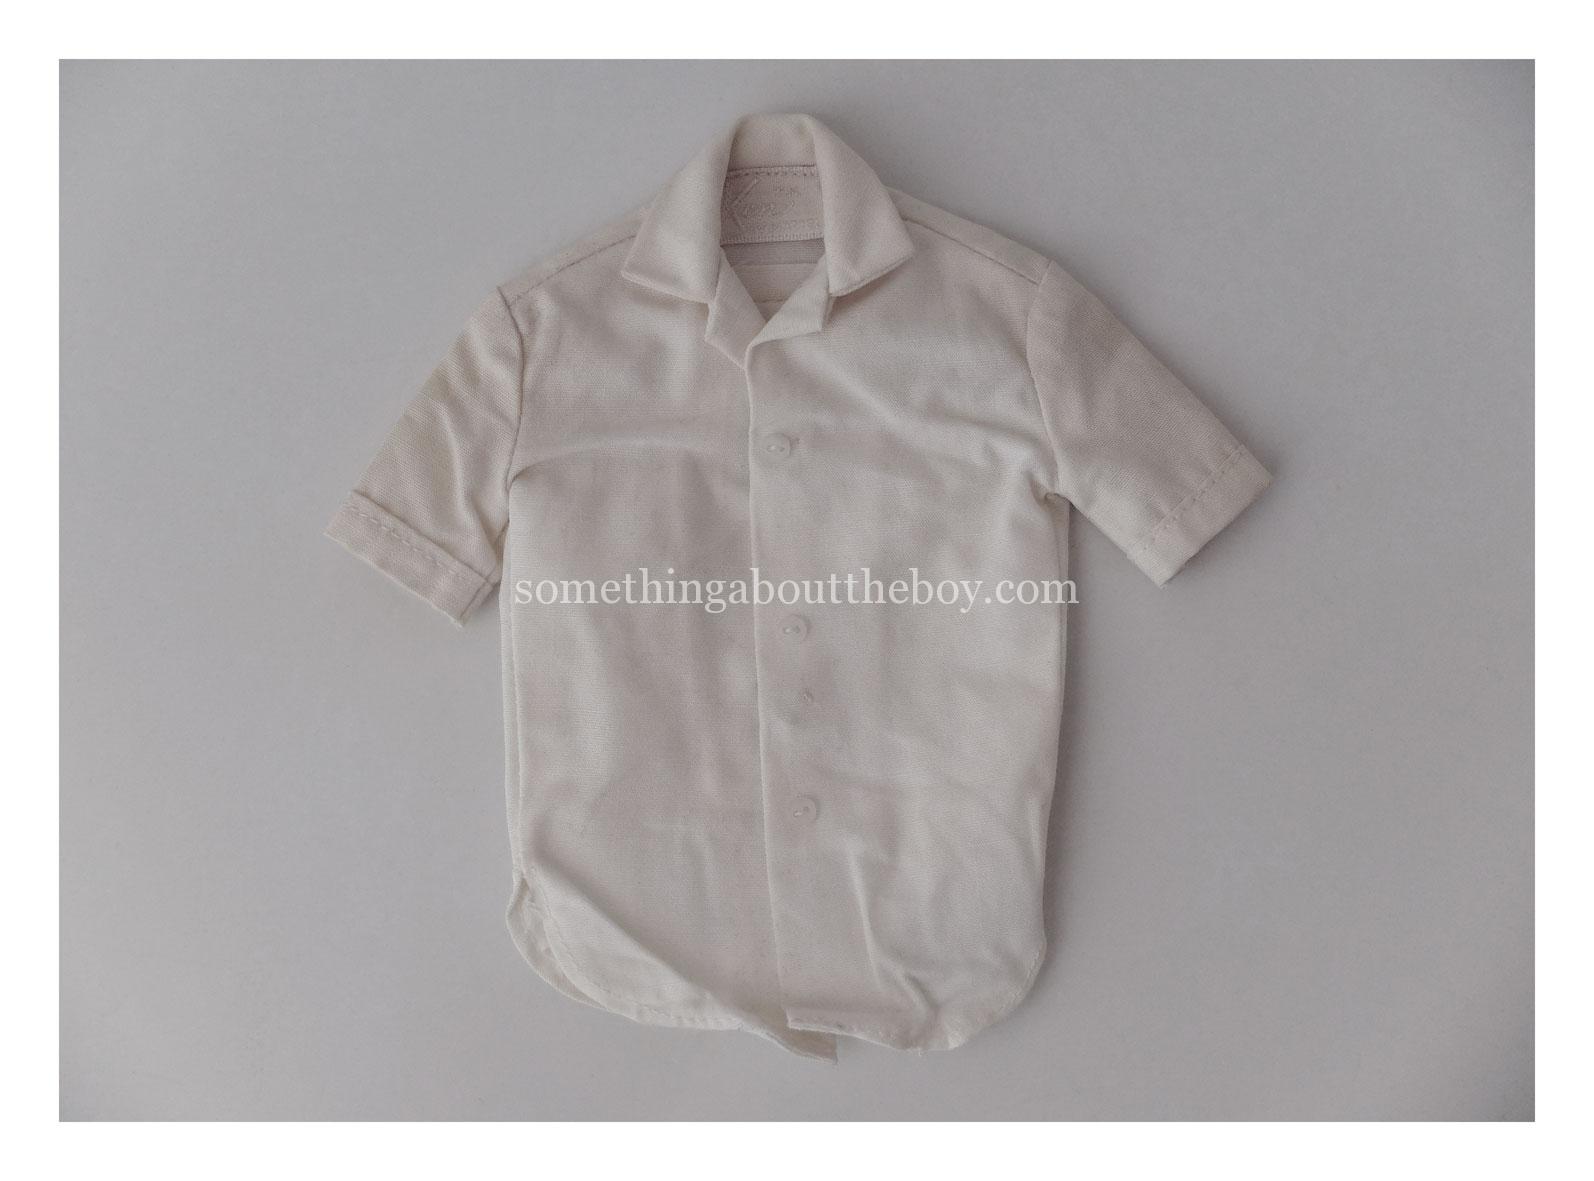 1964 #0776 Ken In Switzerland shirt with completely white Ken label